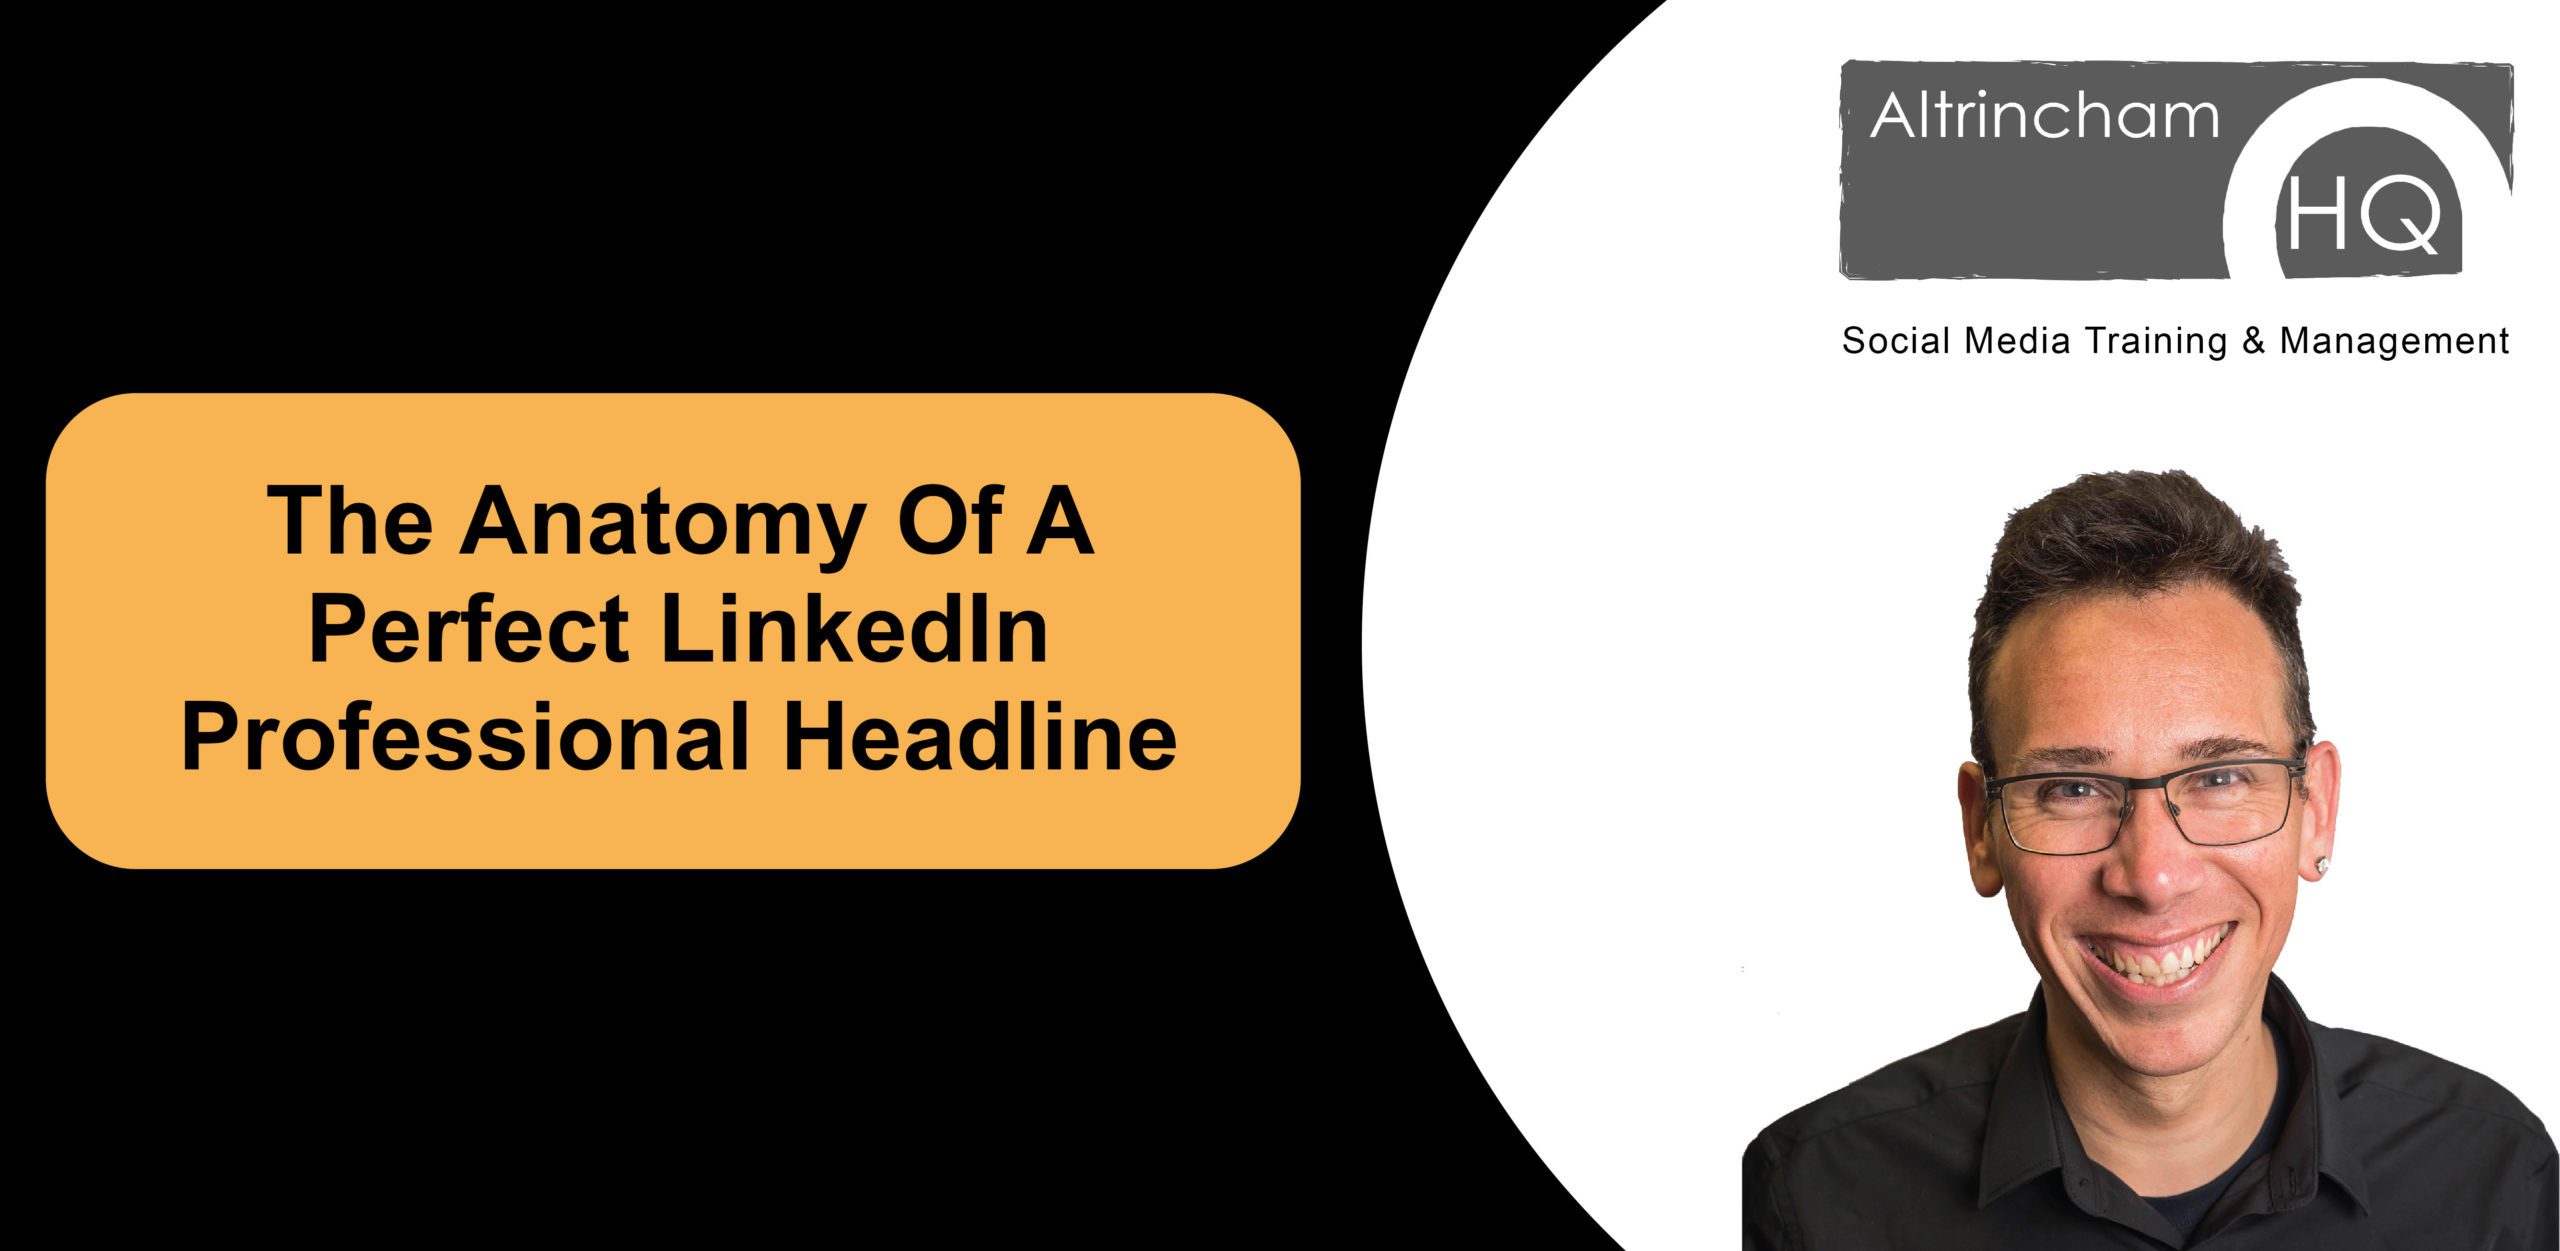 The Anatomy Of A Perfect LinkedIn Professional Headline